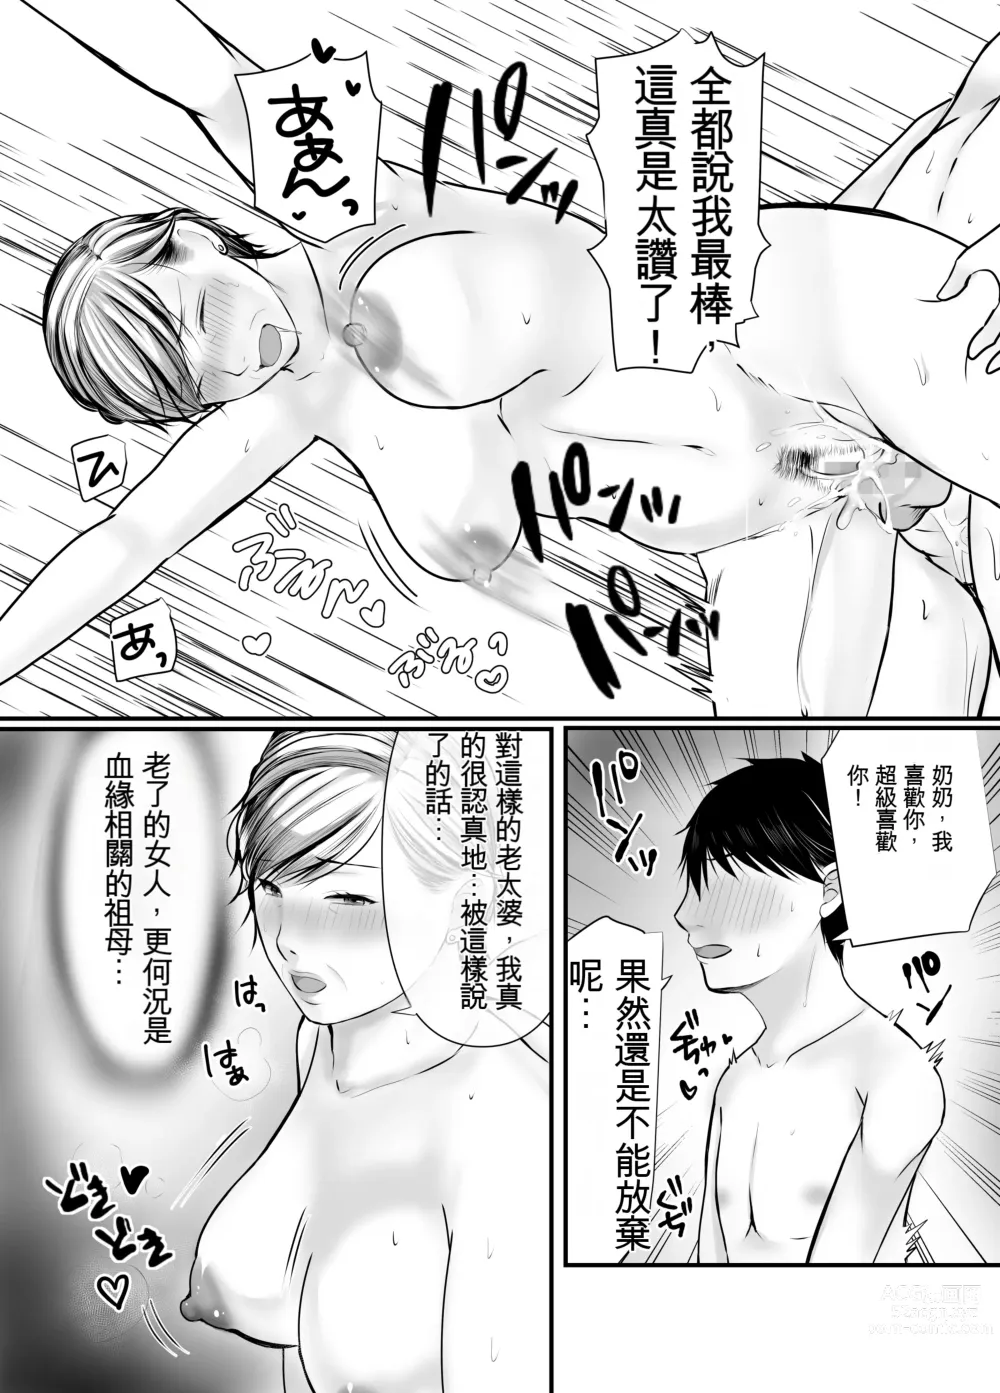 Page 53 of manga 祖母與孫子 ~孫子的第一次被內射的那一天~